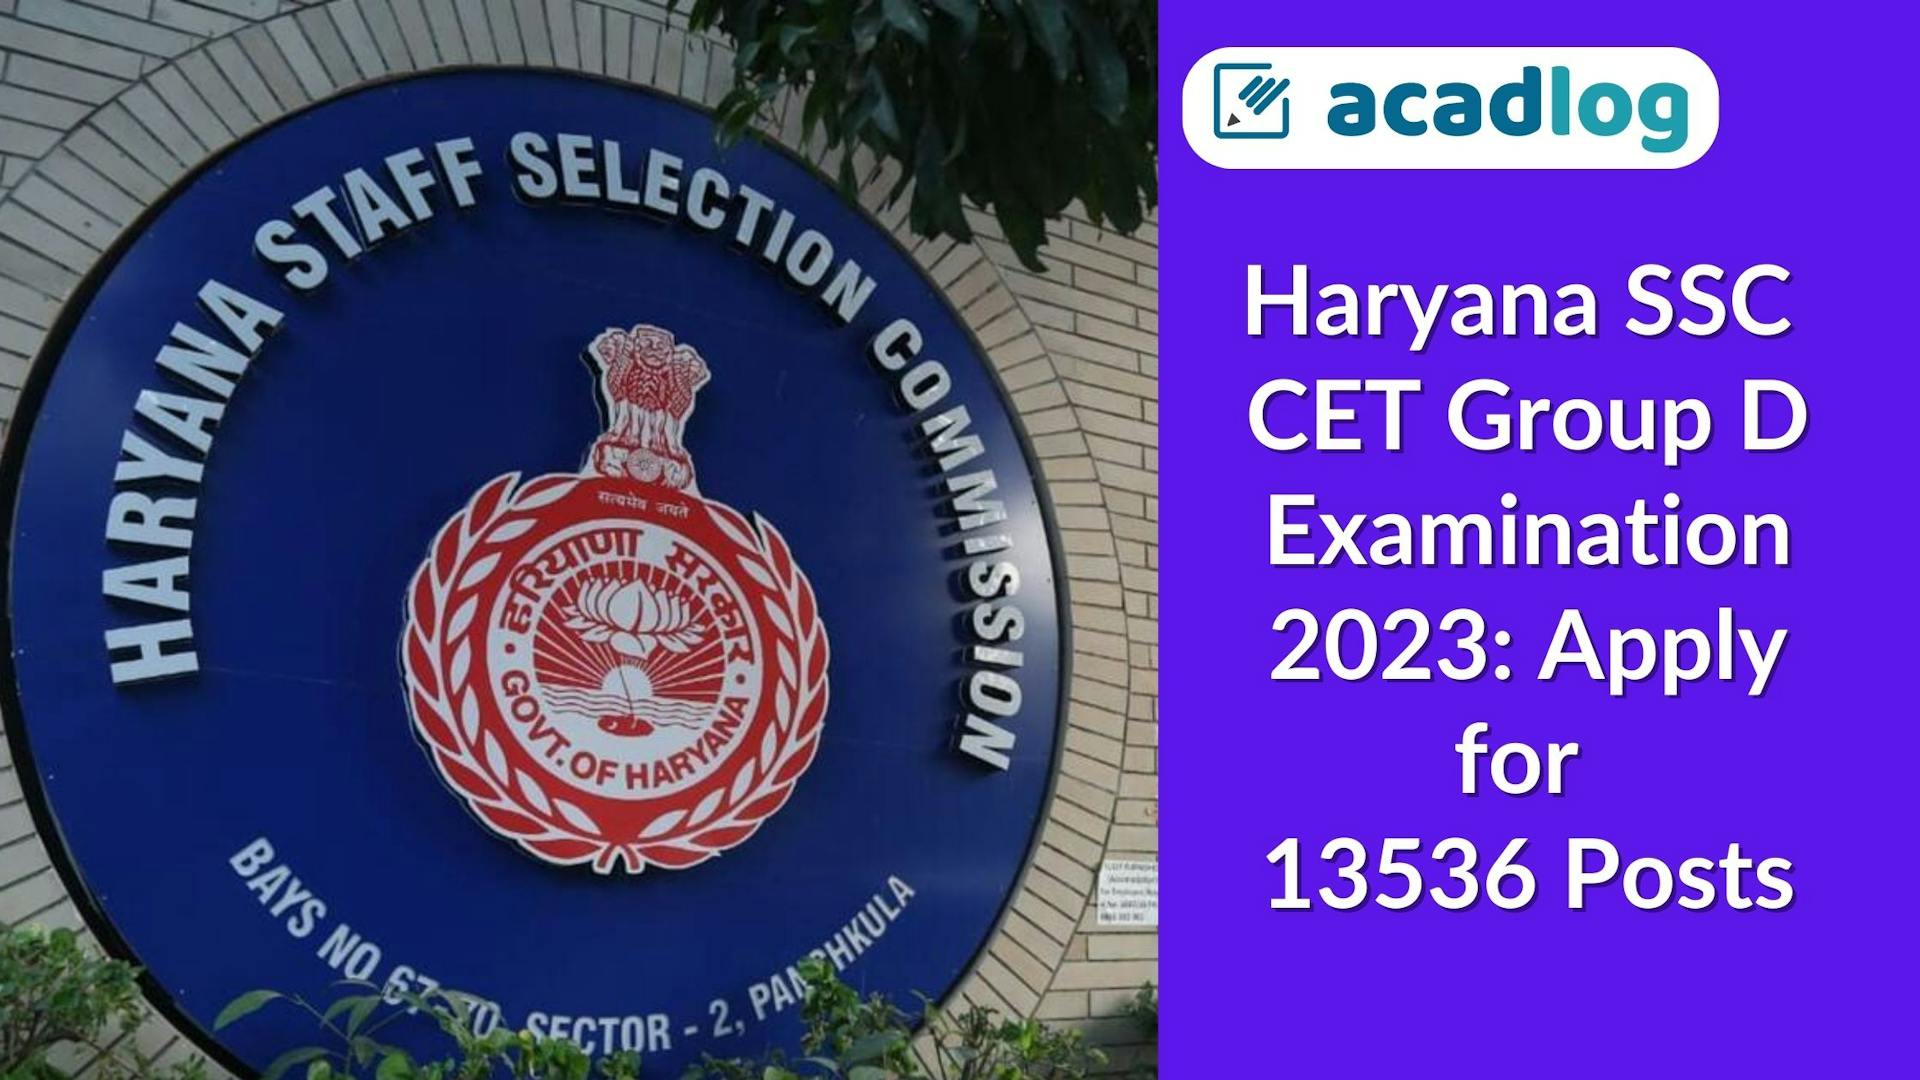 Haryana Govt Jobs: Haryana SSC CET Group D Recruitment 2023